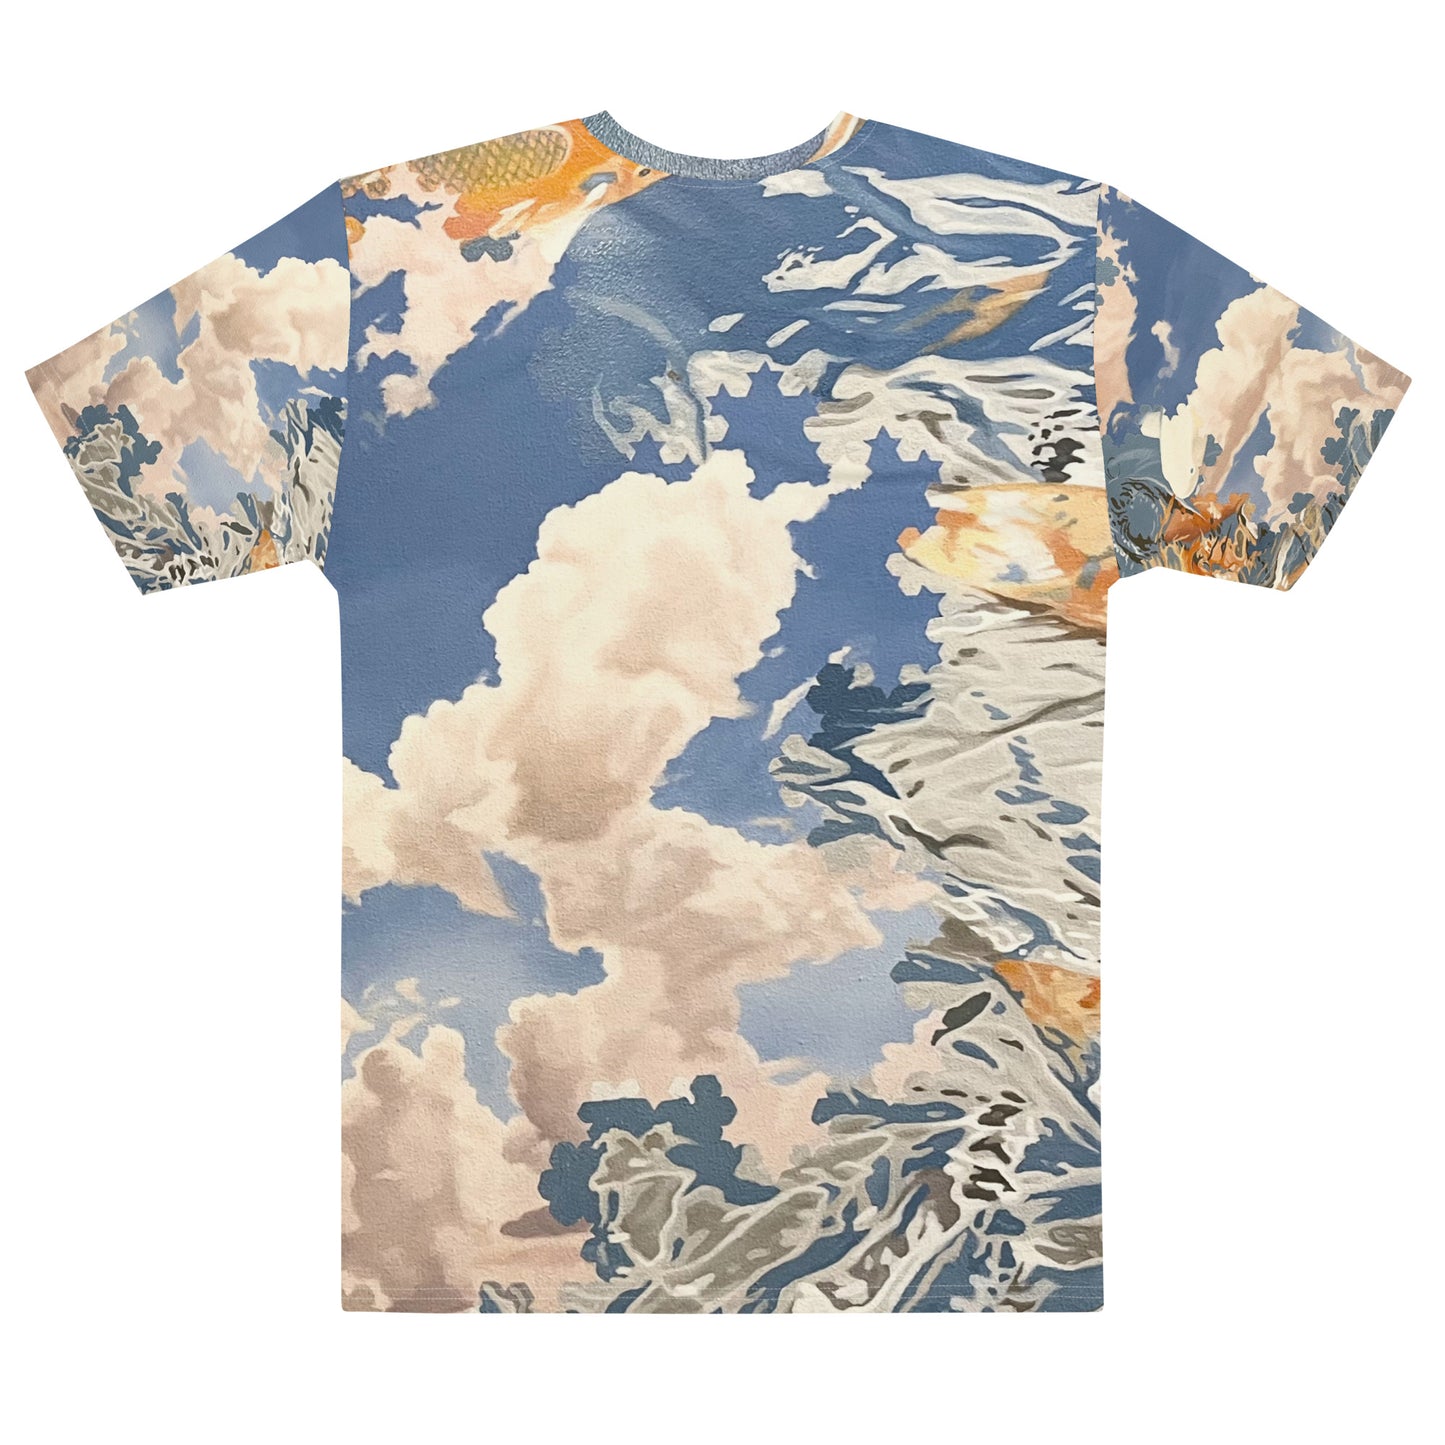 "Clouds Fish" by John Gurbacs t-shirt